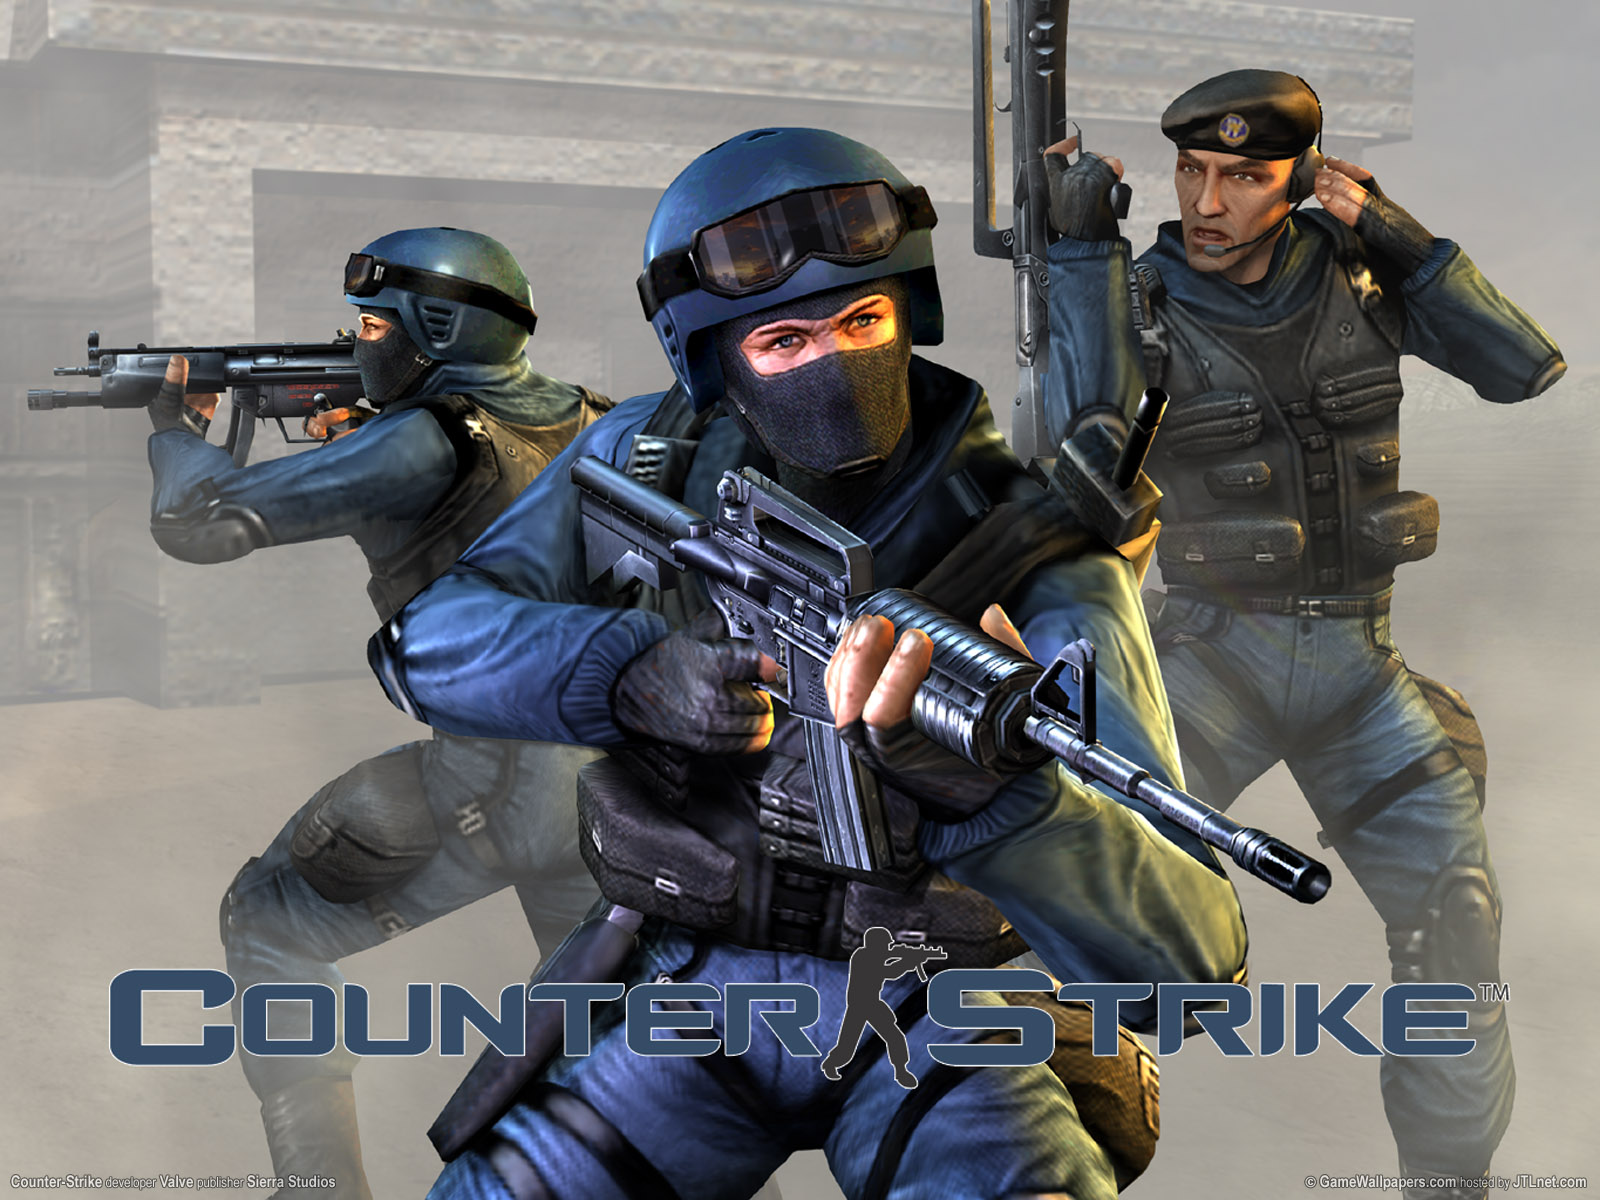 Counter Strike: Condition Zero - Download Free Full Games